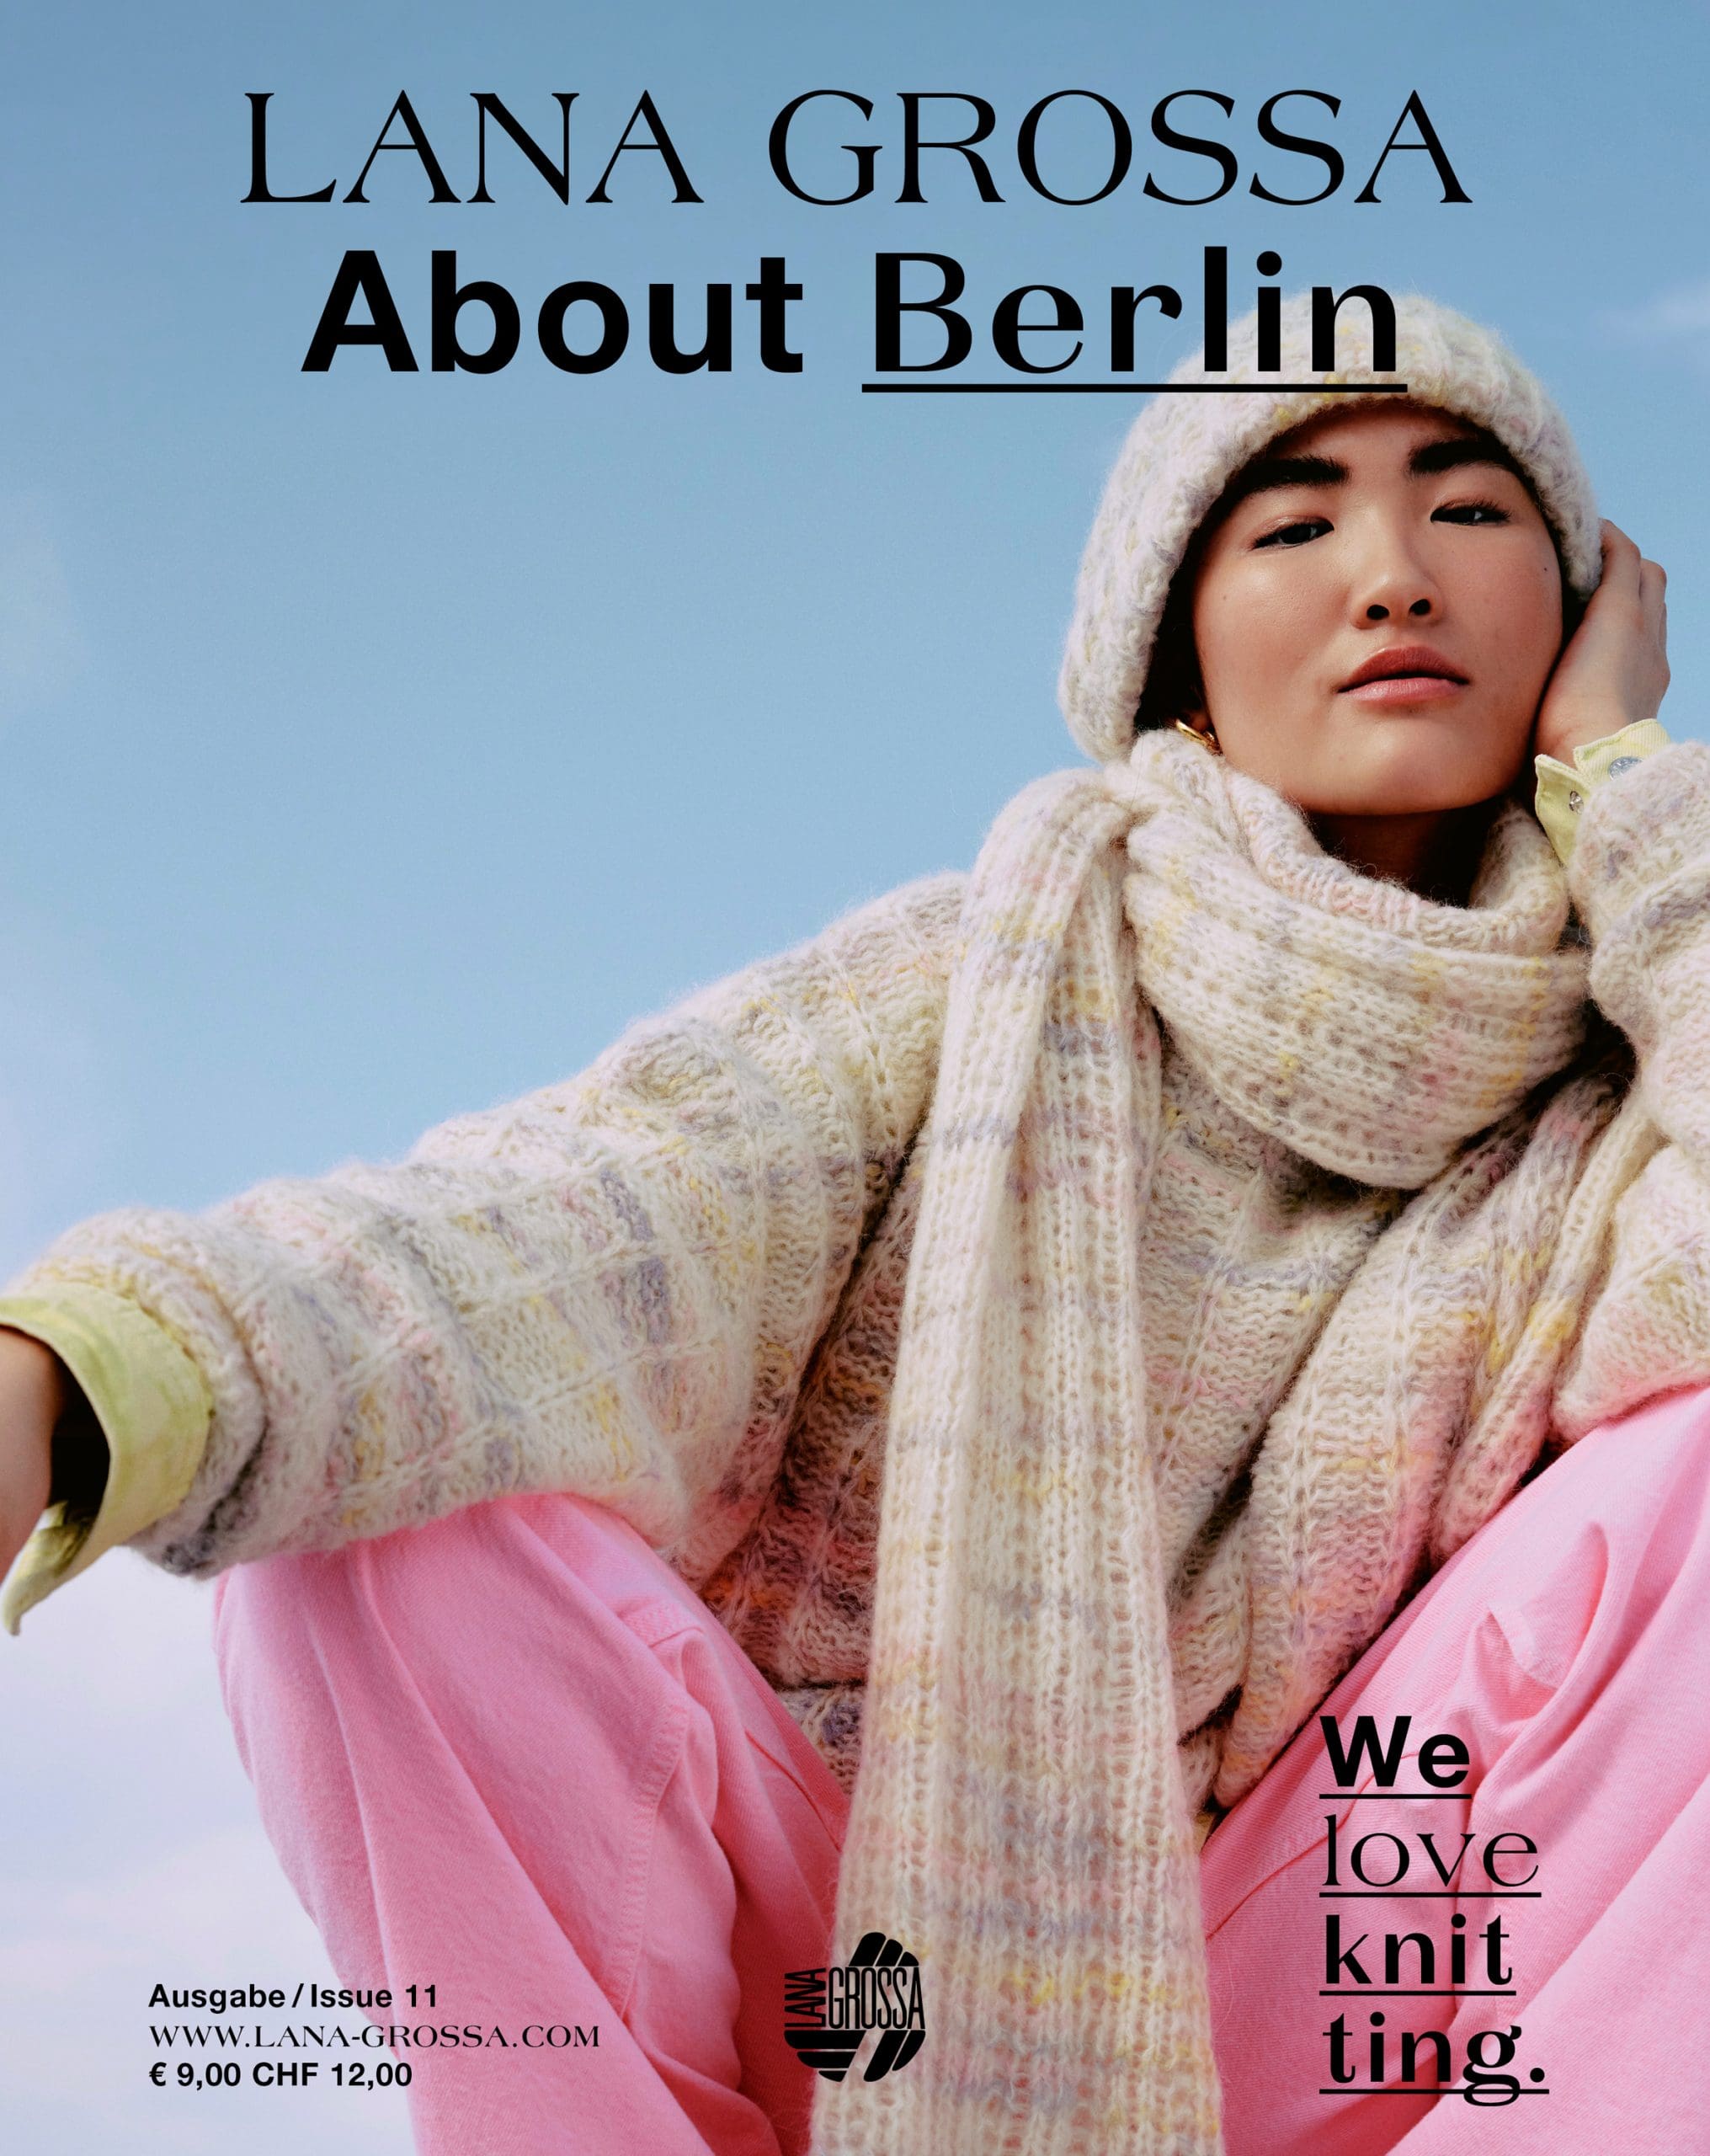 Boek Lana Grossa About Berlin uitgave 11